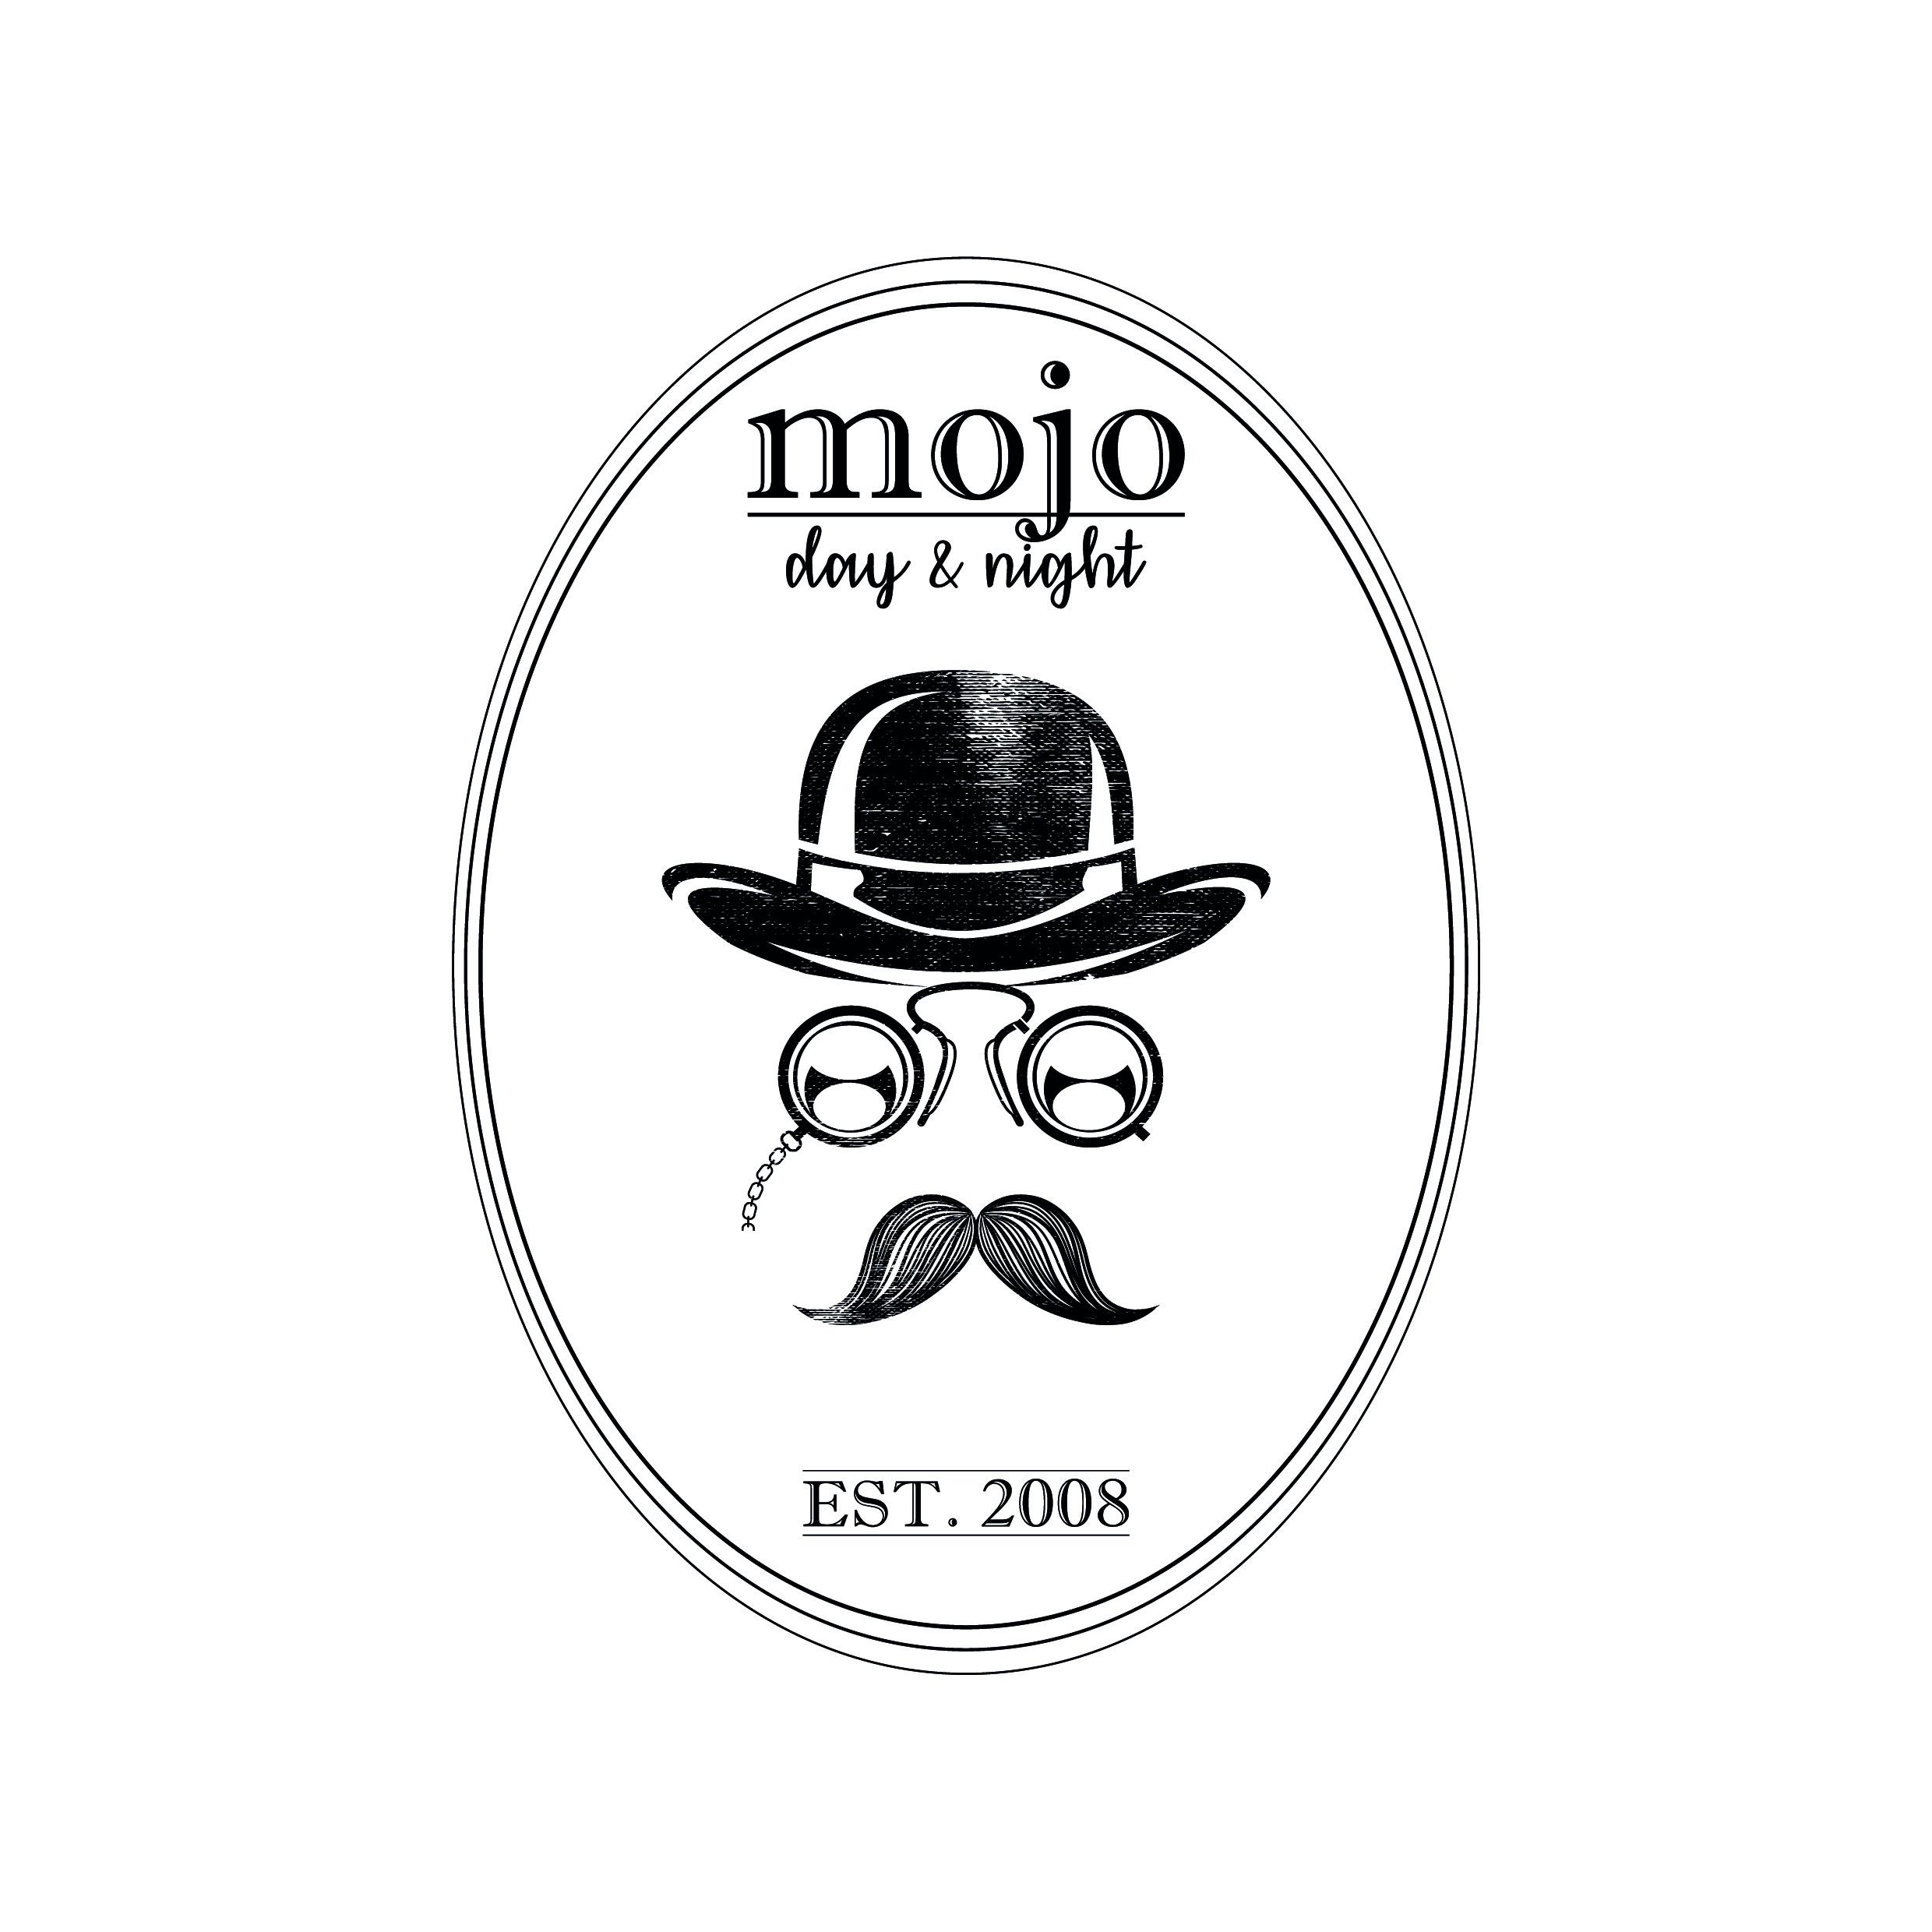 Mojo day & night Cafe - Bar in Offenbach am Main - Logo